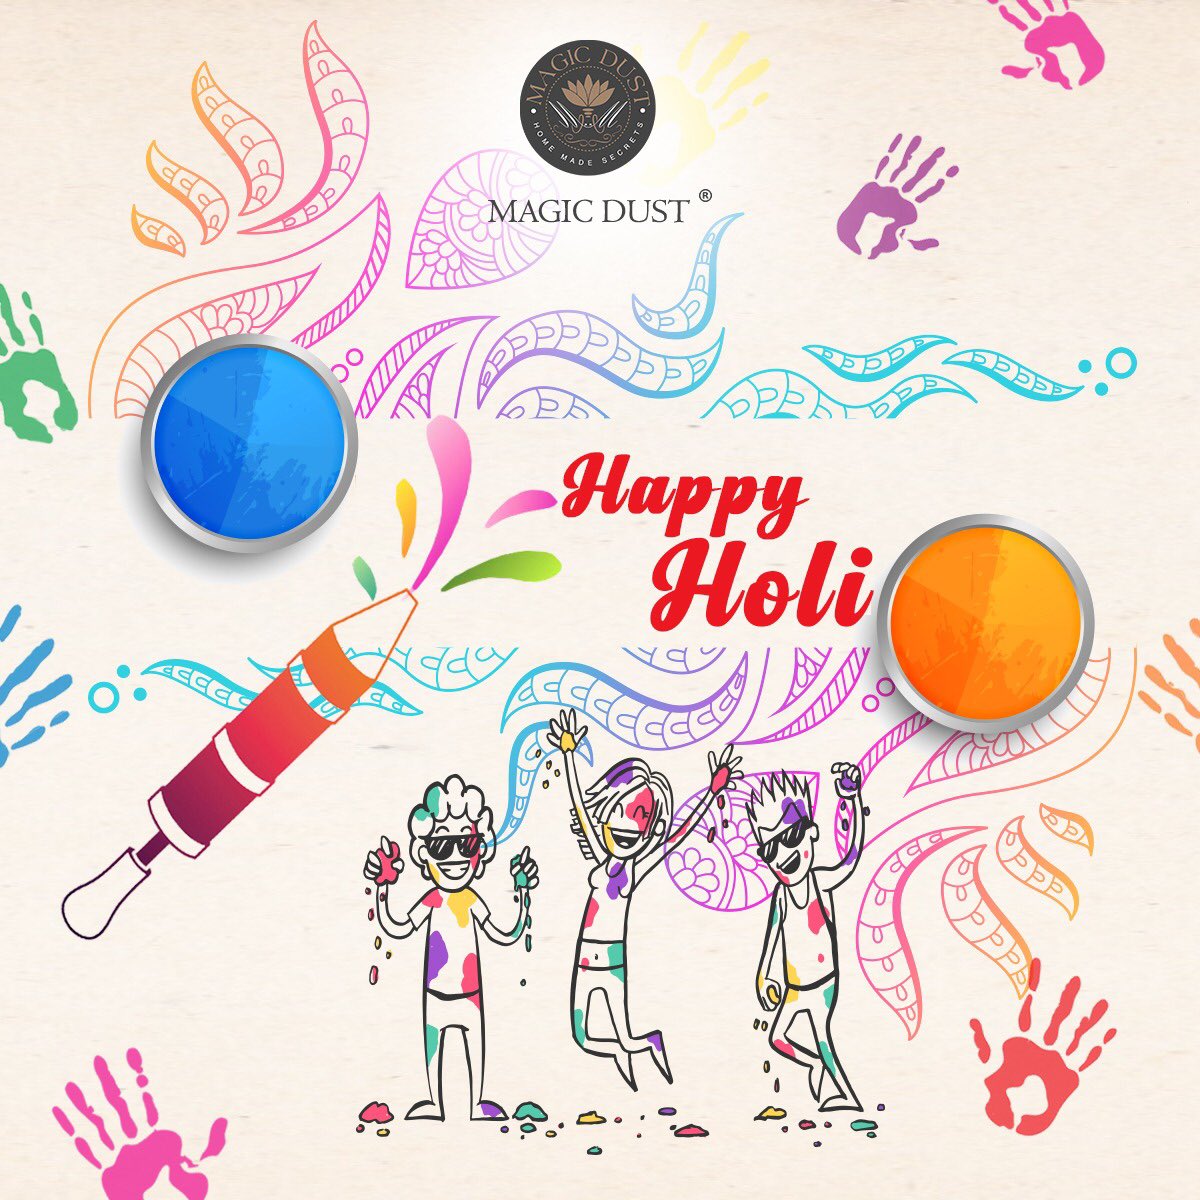 Spread happiness and splash colours.
Have a safe and organic Holi.
We wish you a very Happy Holi from Magic Dust.

#organicholi #happyholi2019 #holi2019 #holi #safeholi #colours #organicindia #organicmakeup #organicakincare #skincareindia #holiindia #indianskincare #holihai